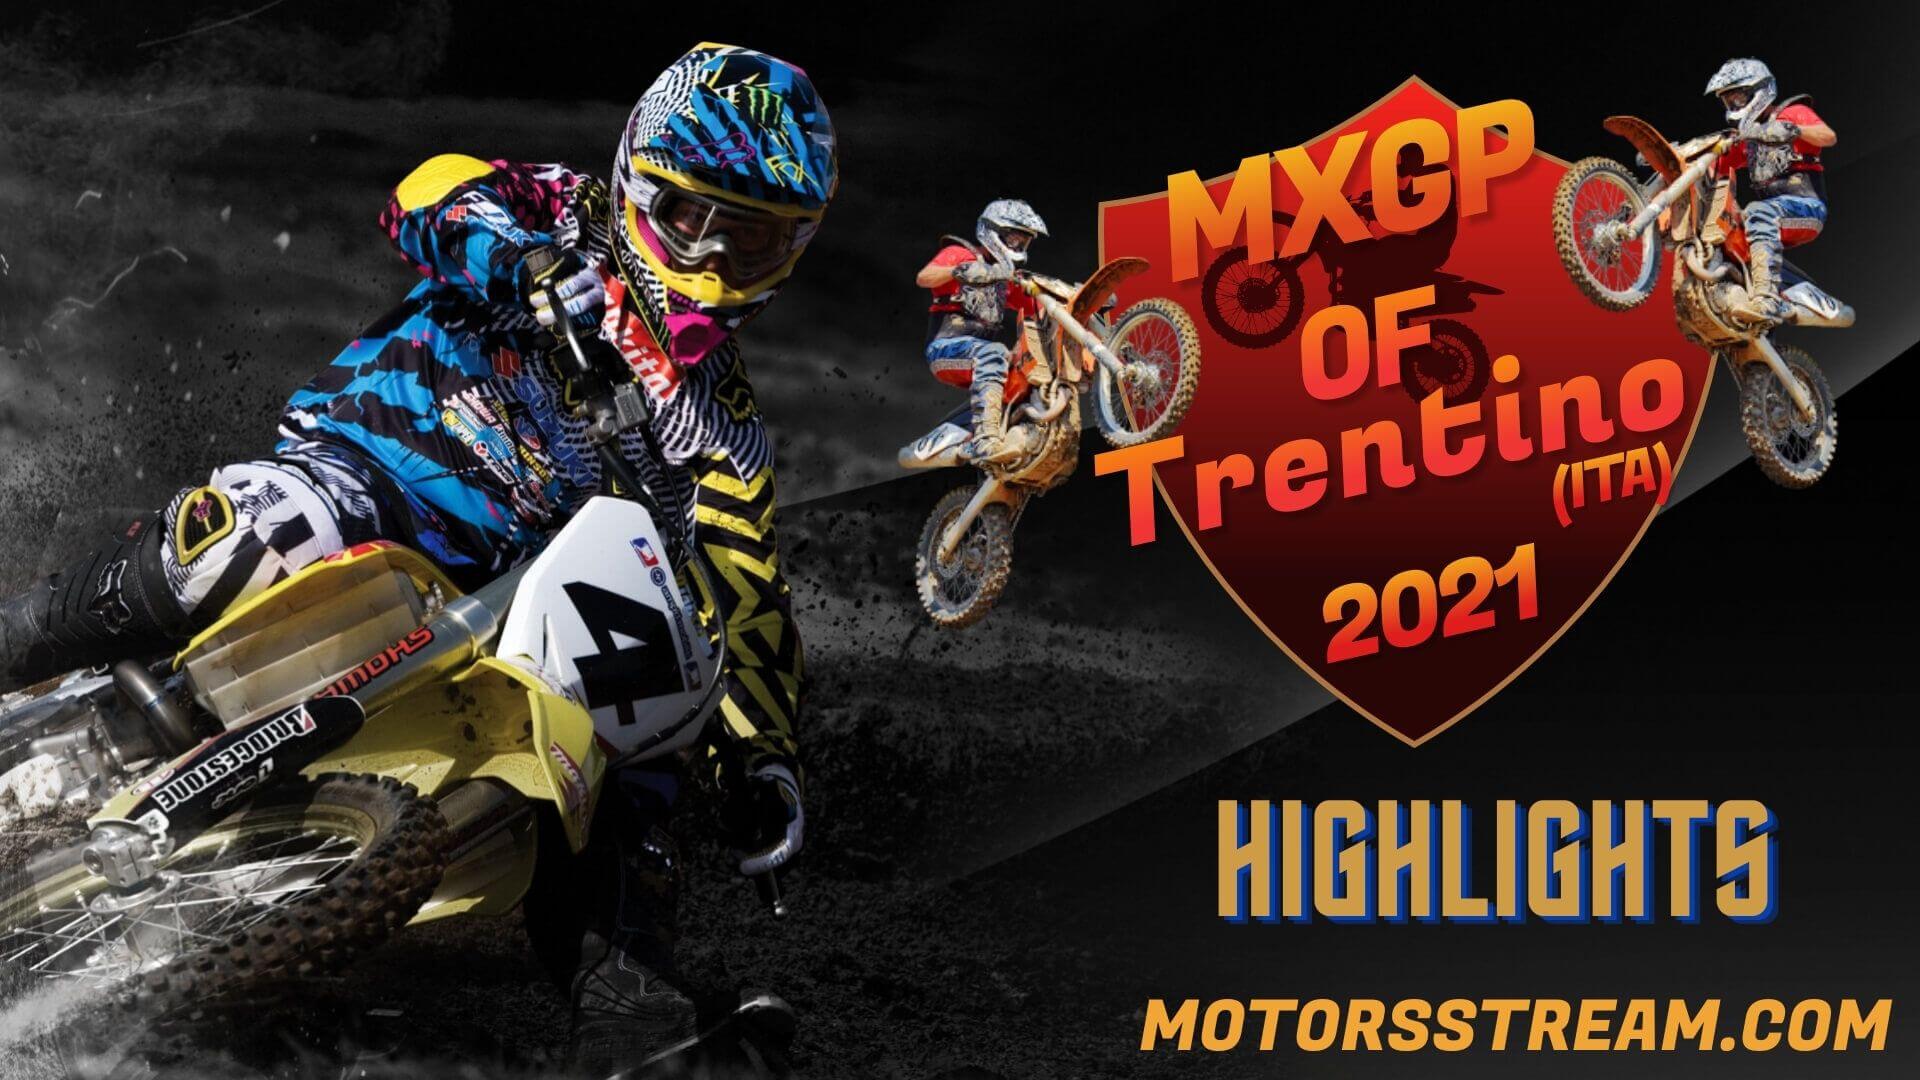 FIM Motocross Trentino Highlights 2021 MXGP